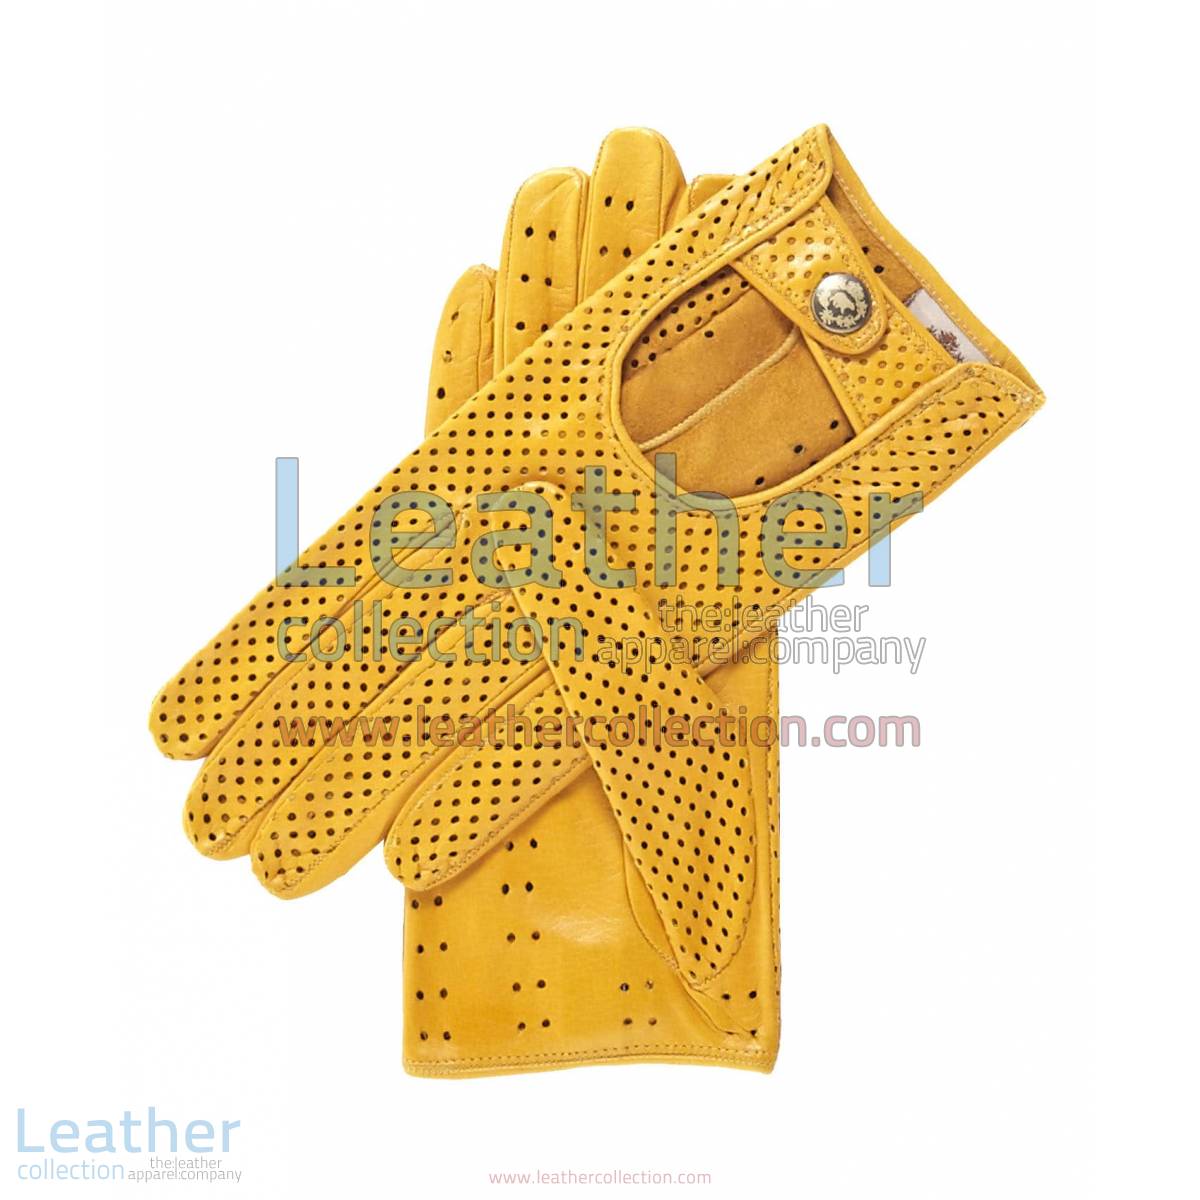 Ventilated Yellow Driving Gloves Ladies | ladies driving gloves,yellow driving gloves